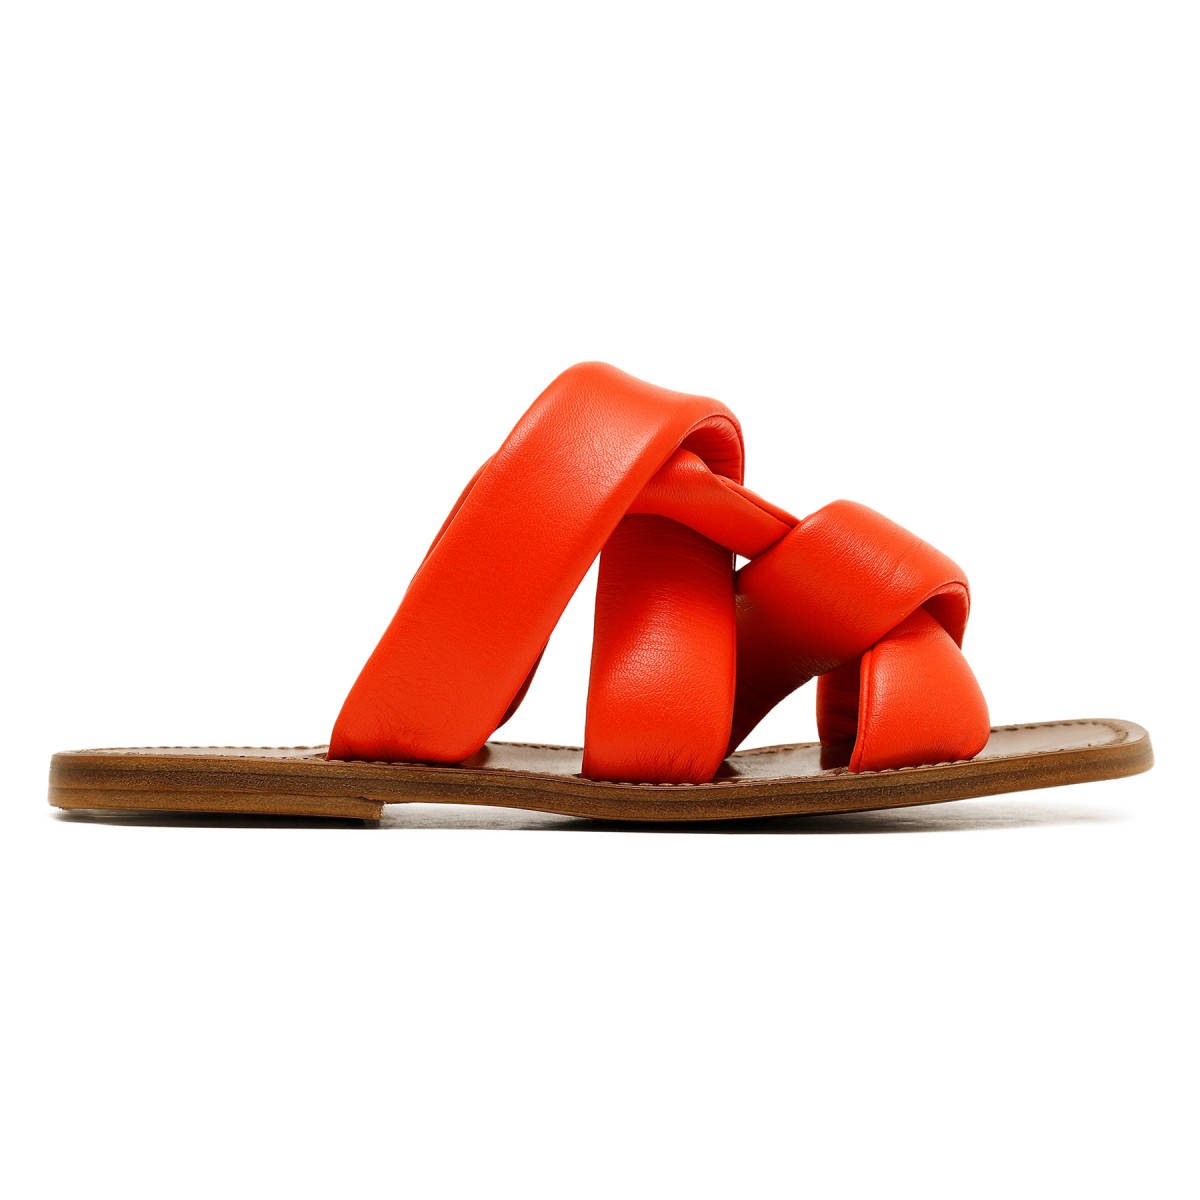 Red leather slide sandals